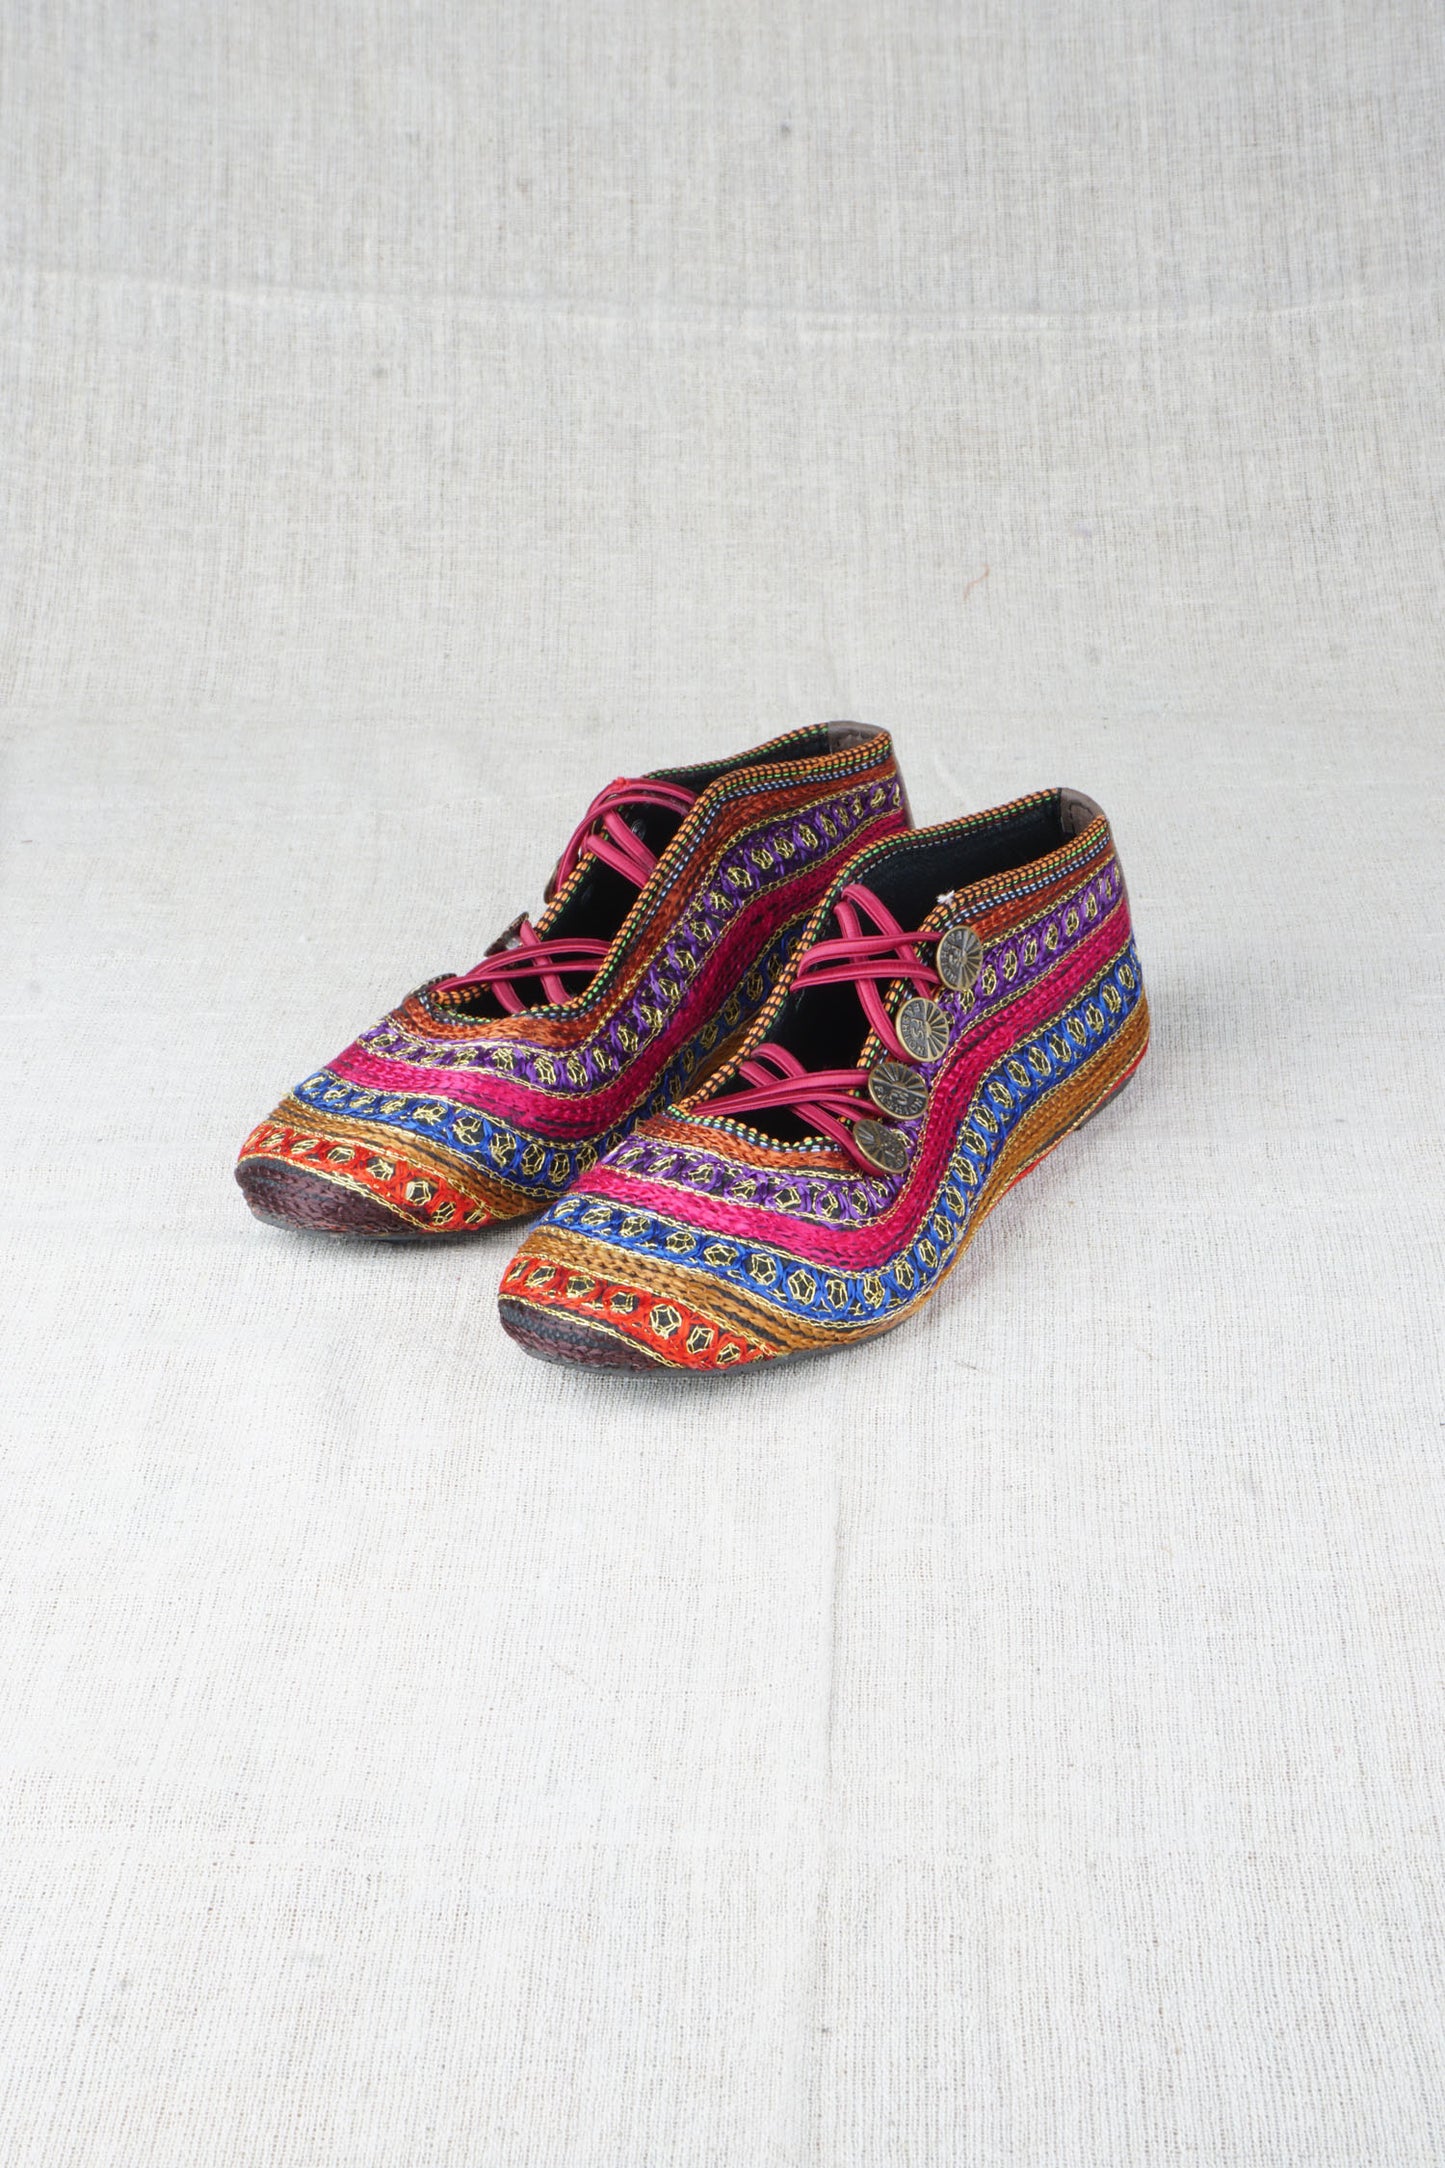 Vibrant Violet Indian Rajasthani Shoes